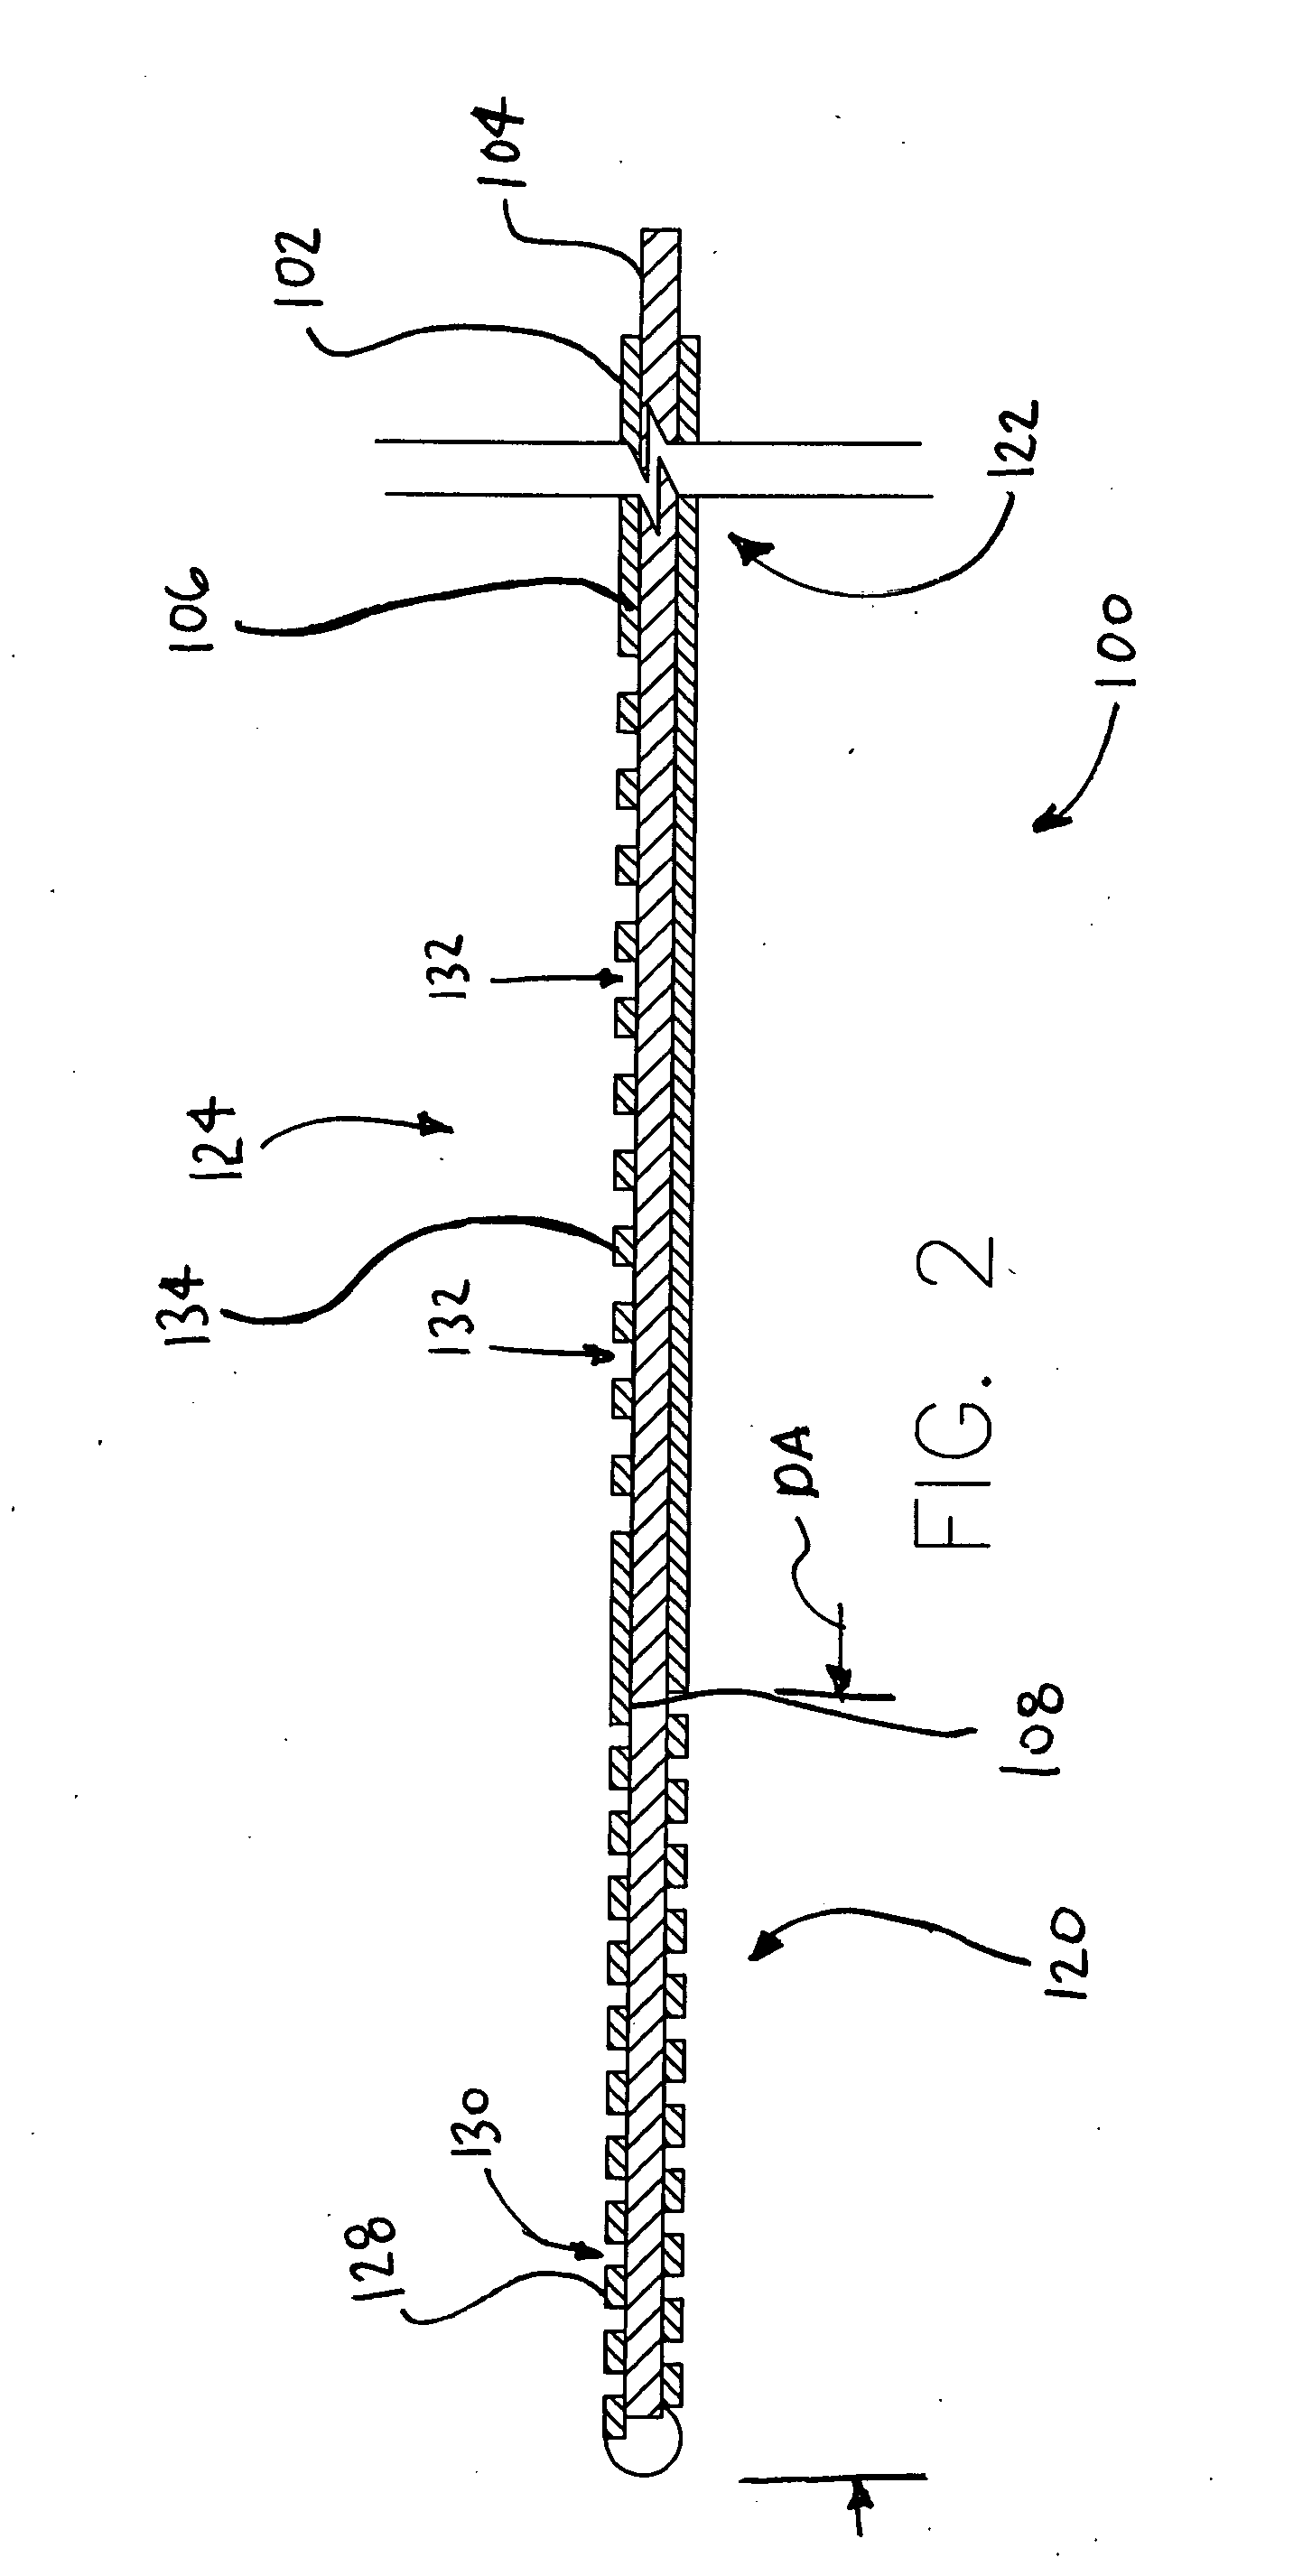 Articulator with adjustable stiffness distal portion